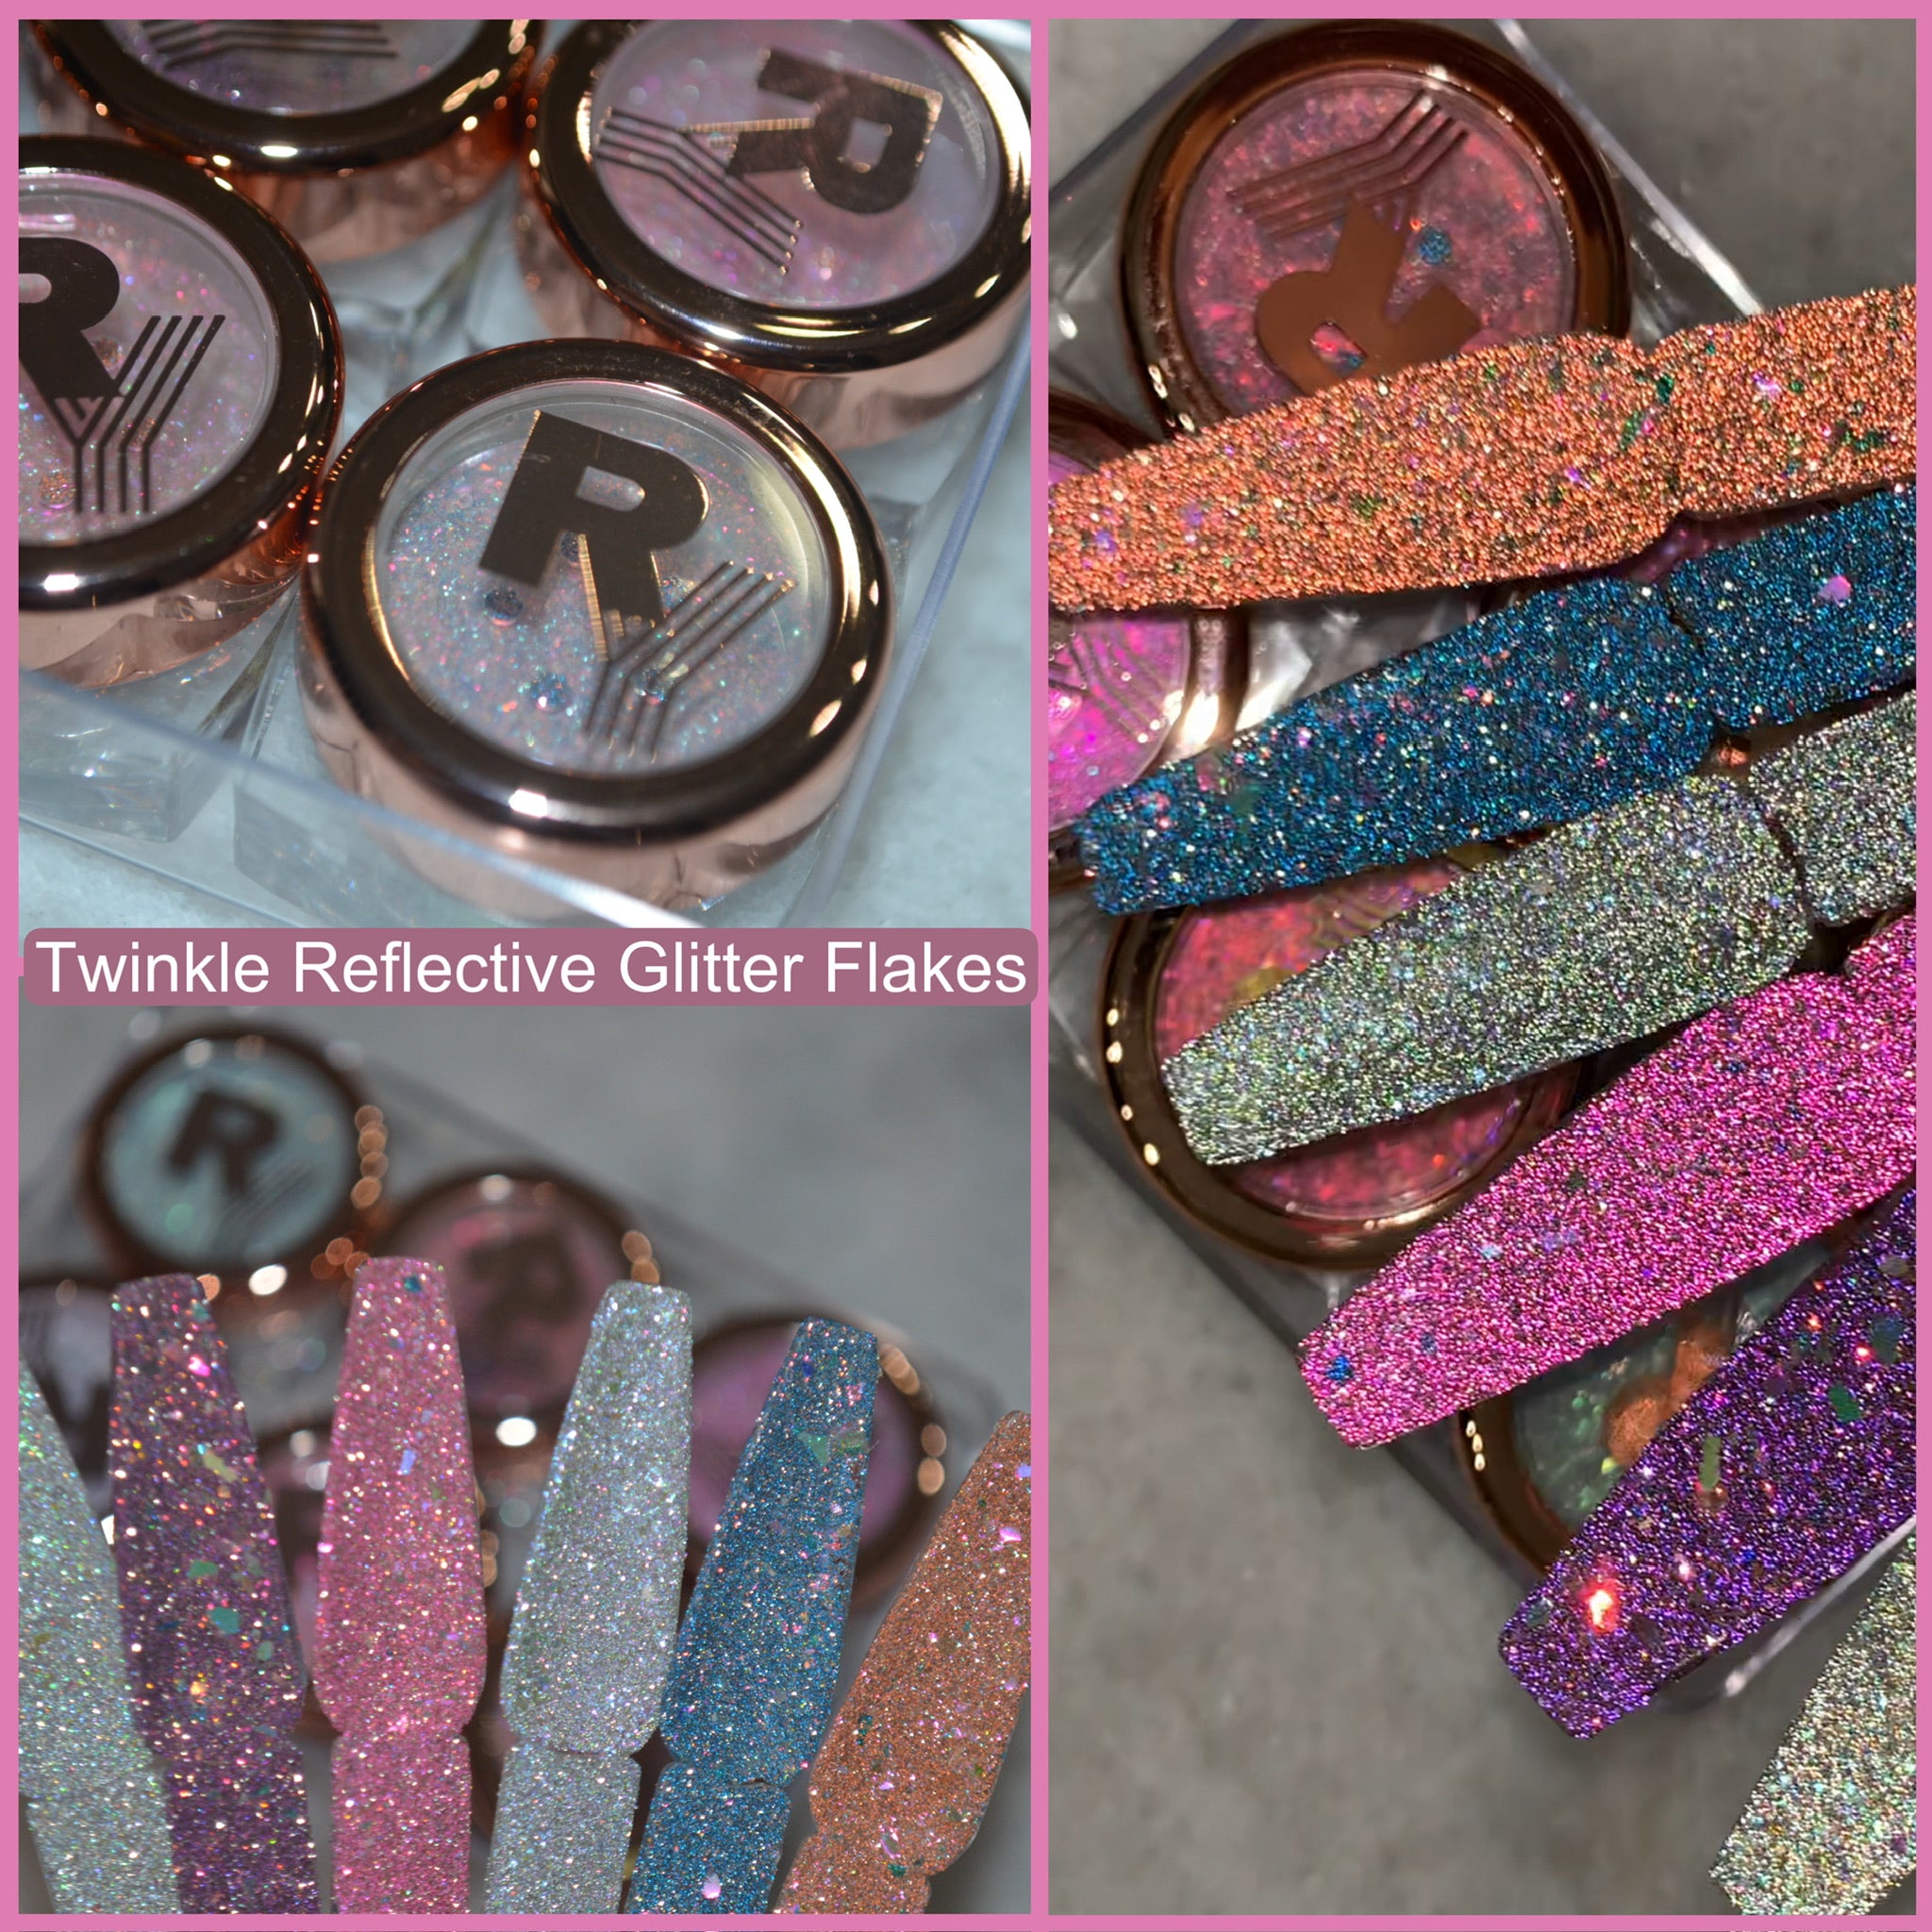 Twinkle Reflective Glitter Flakes